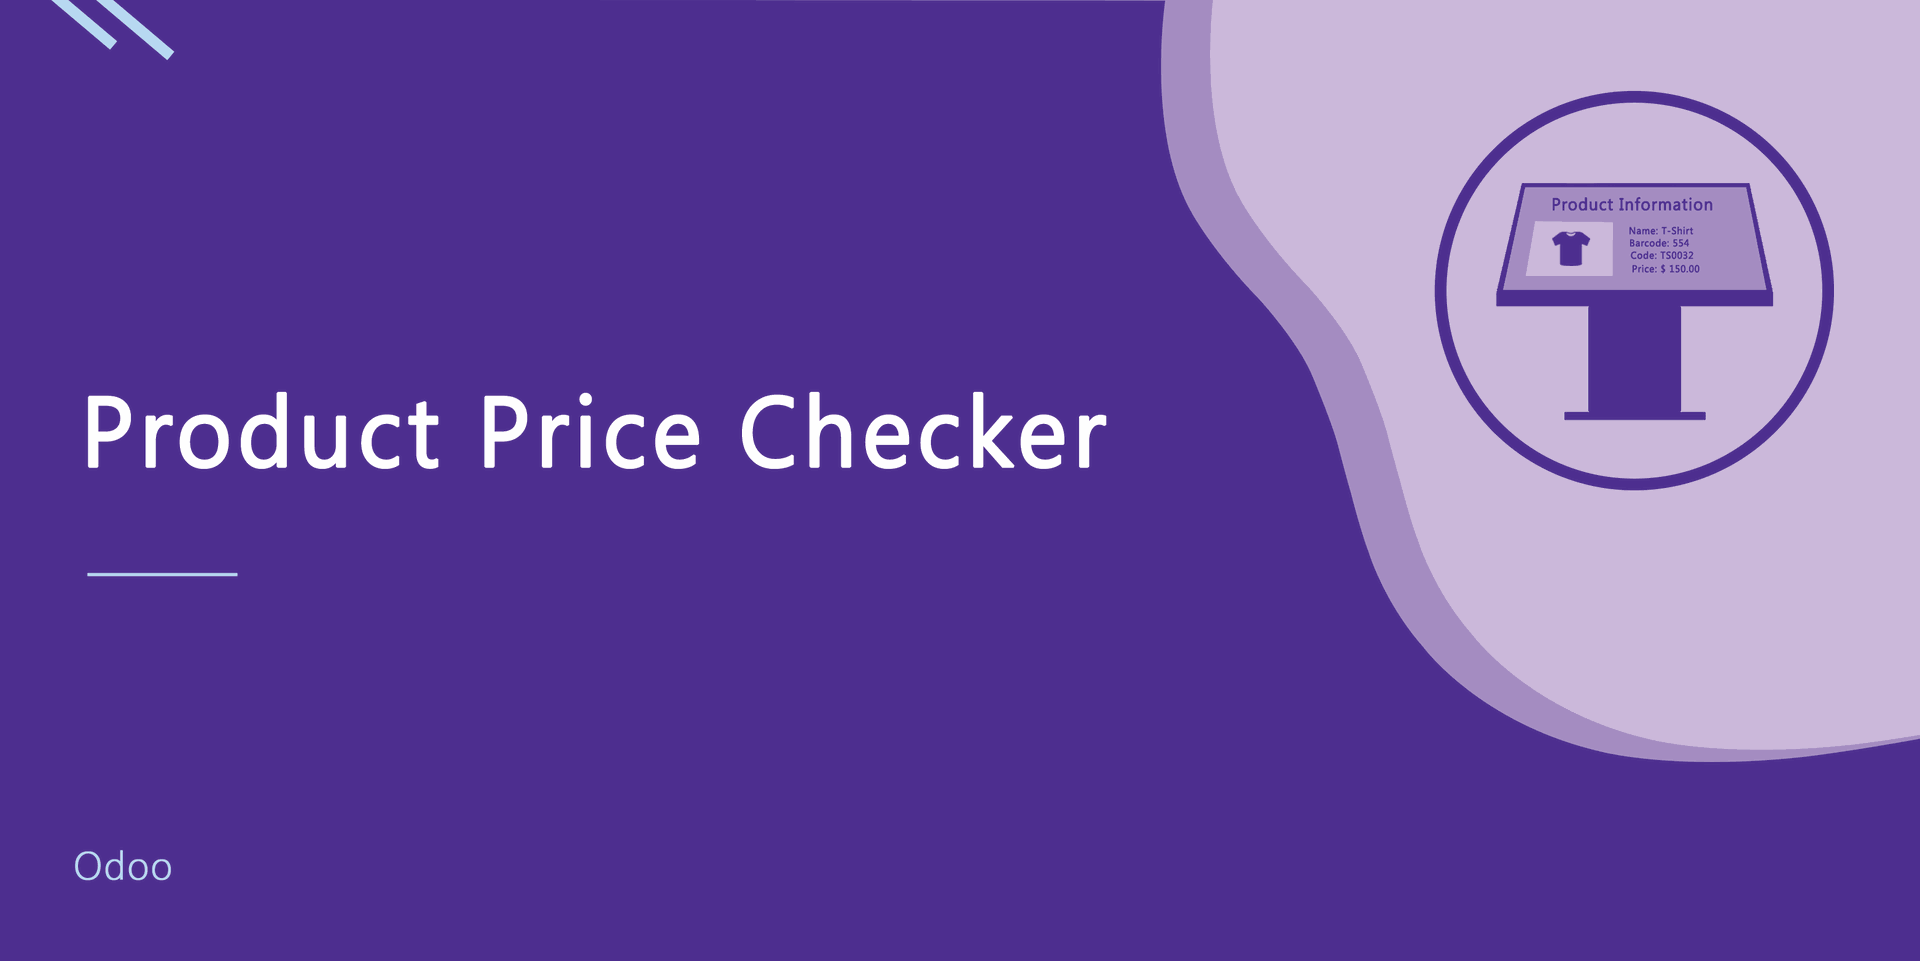 Product Price Checker
